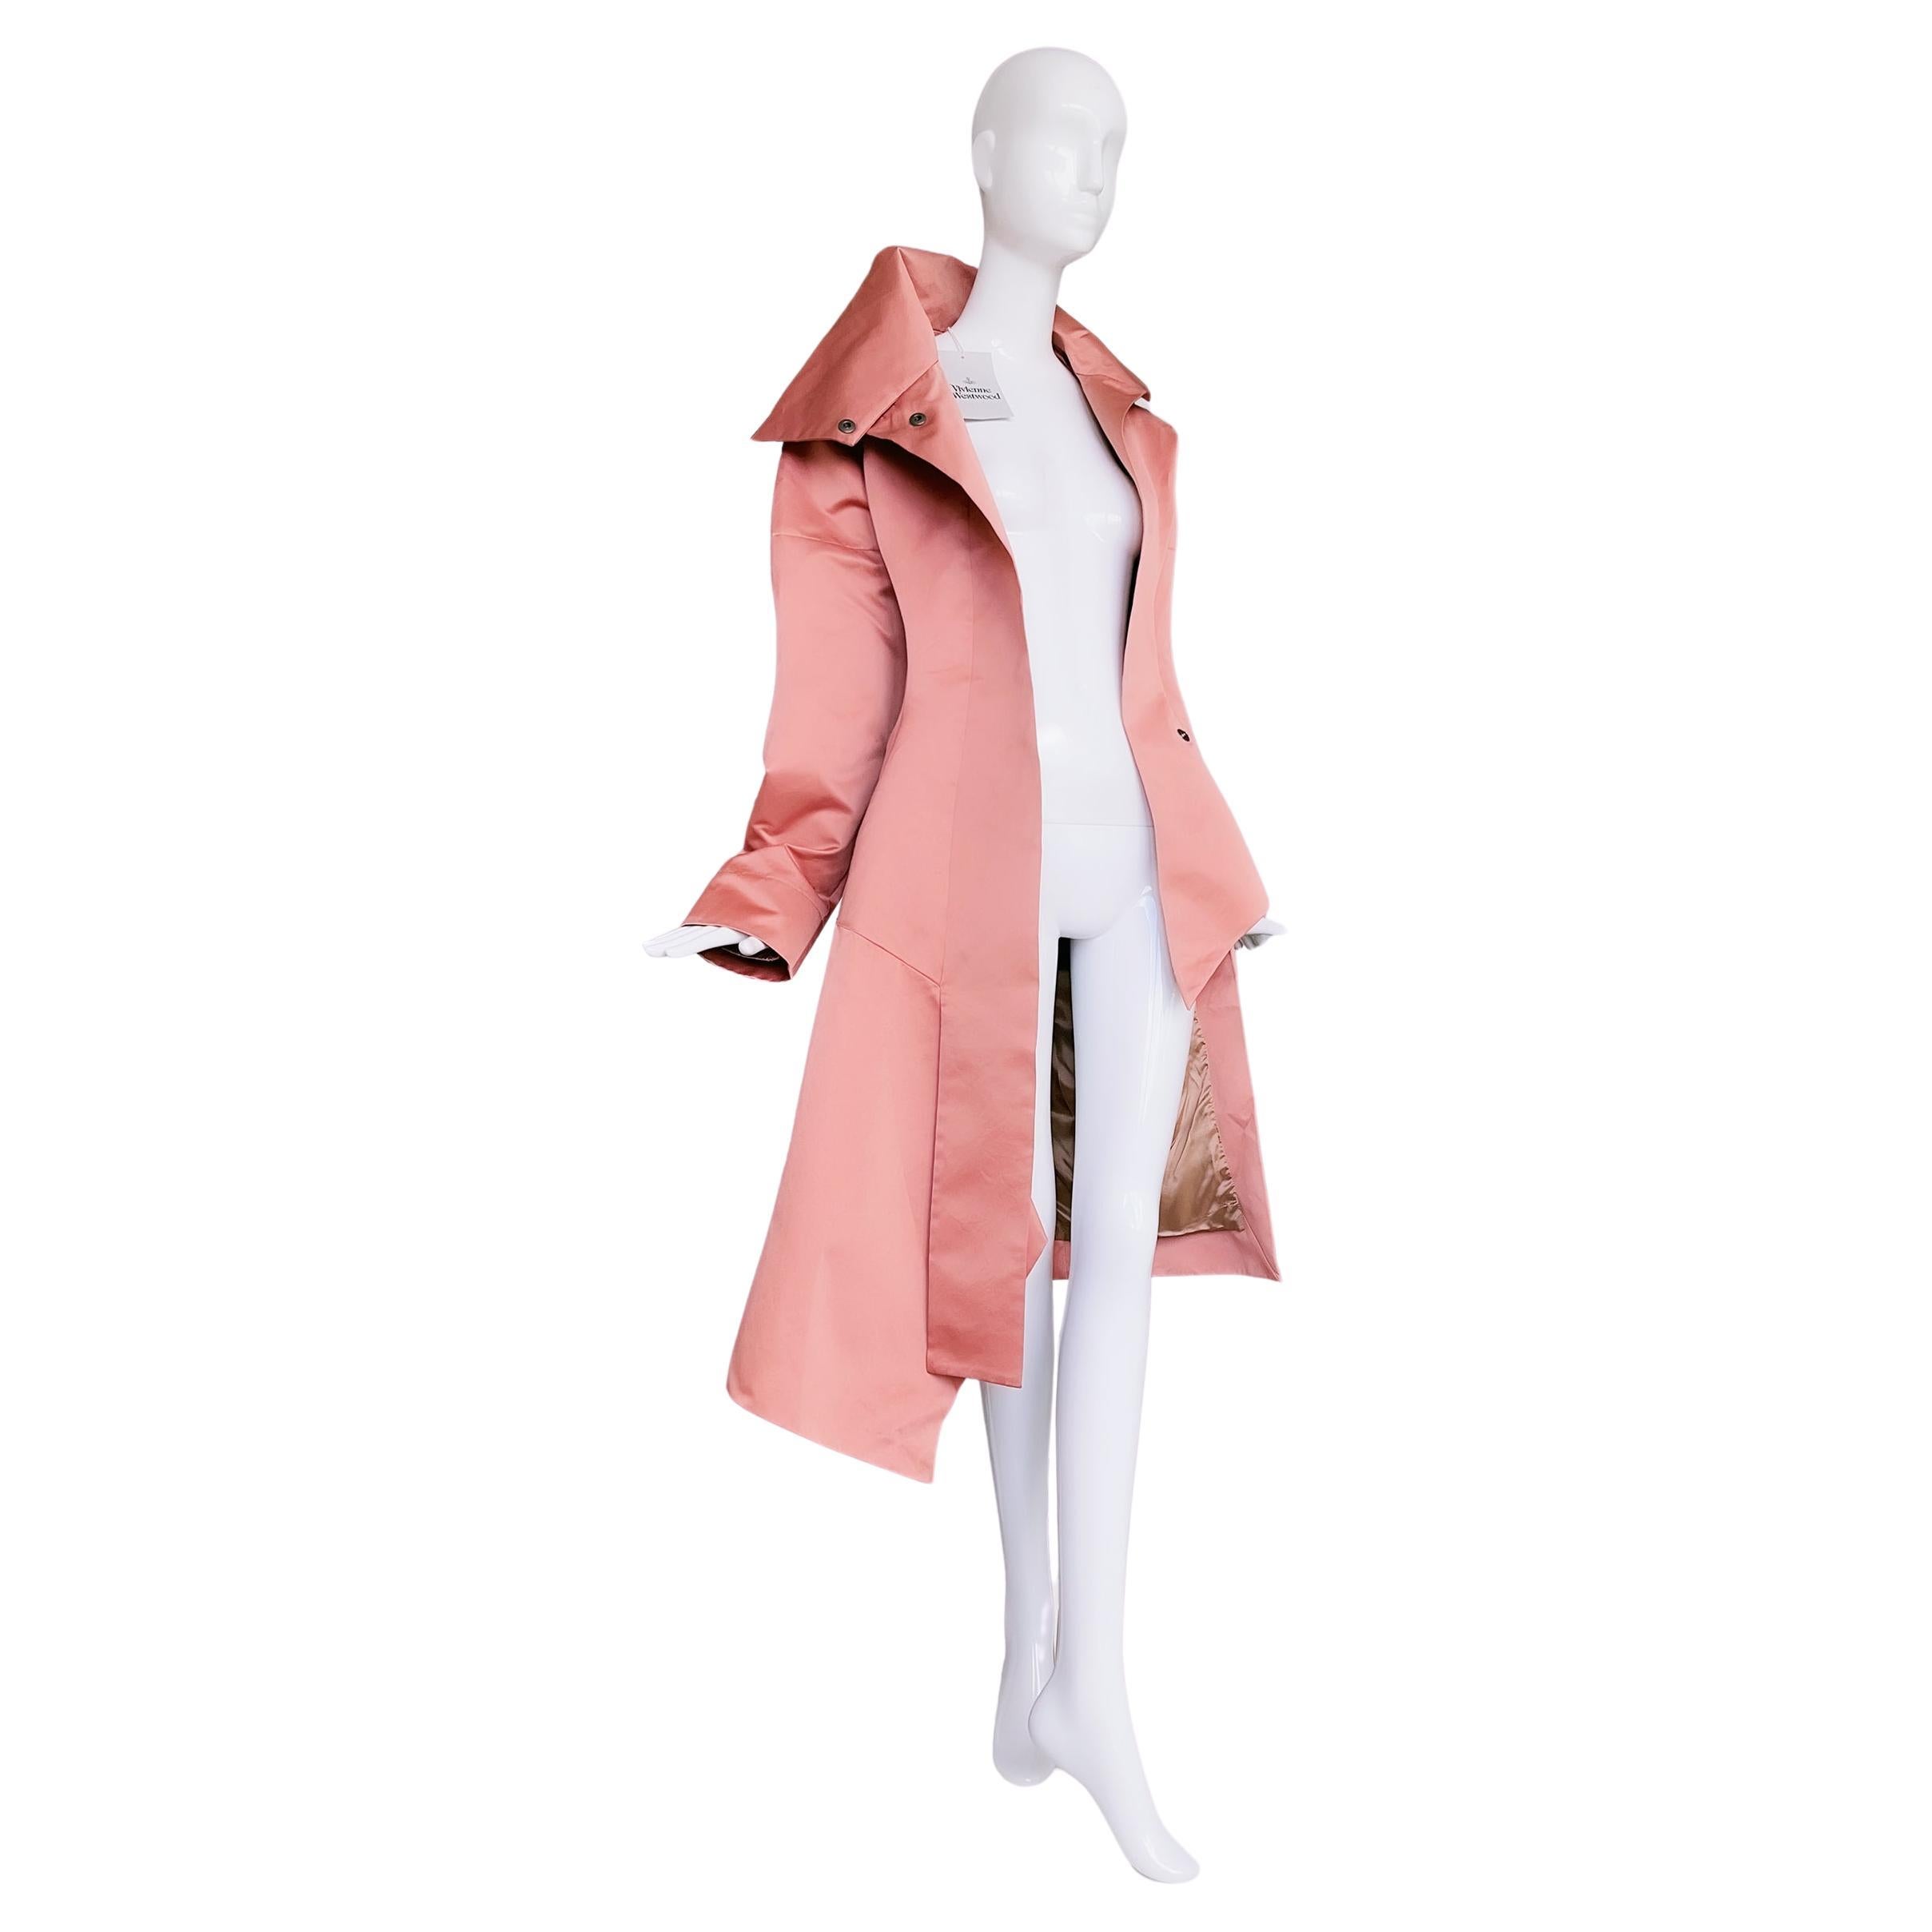 Vivienne Westwood SS 2021 BAT COAT Satin Jacket Oversize Damatic For Sale